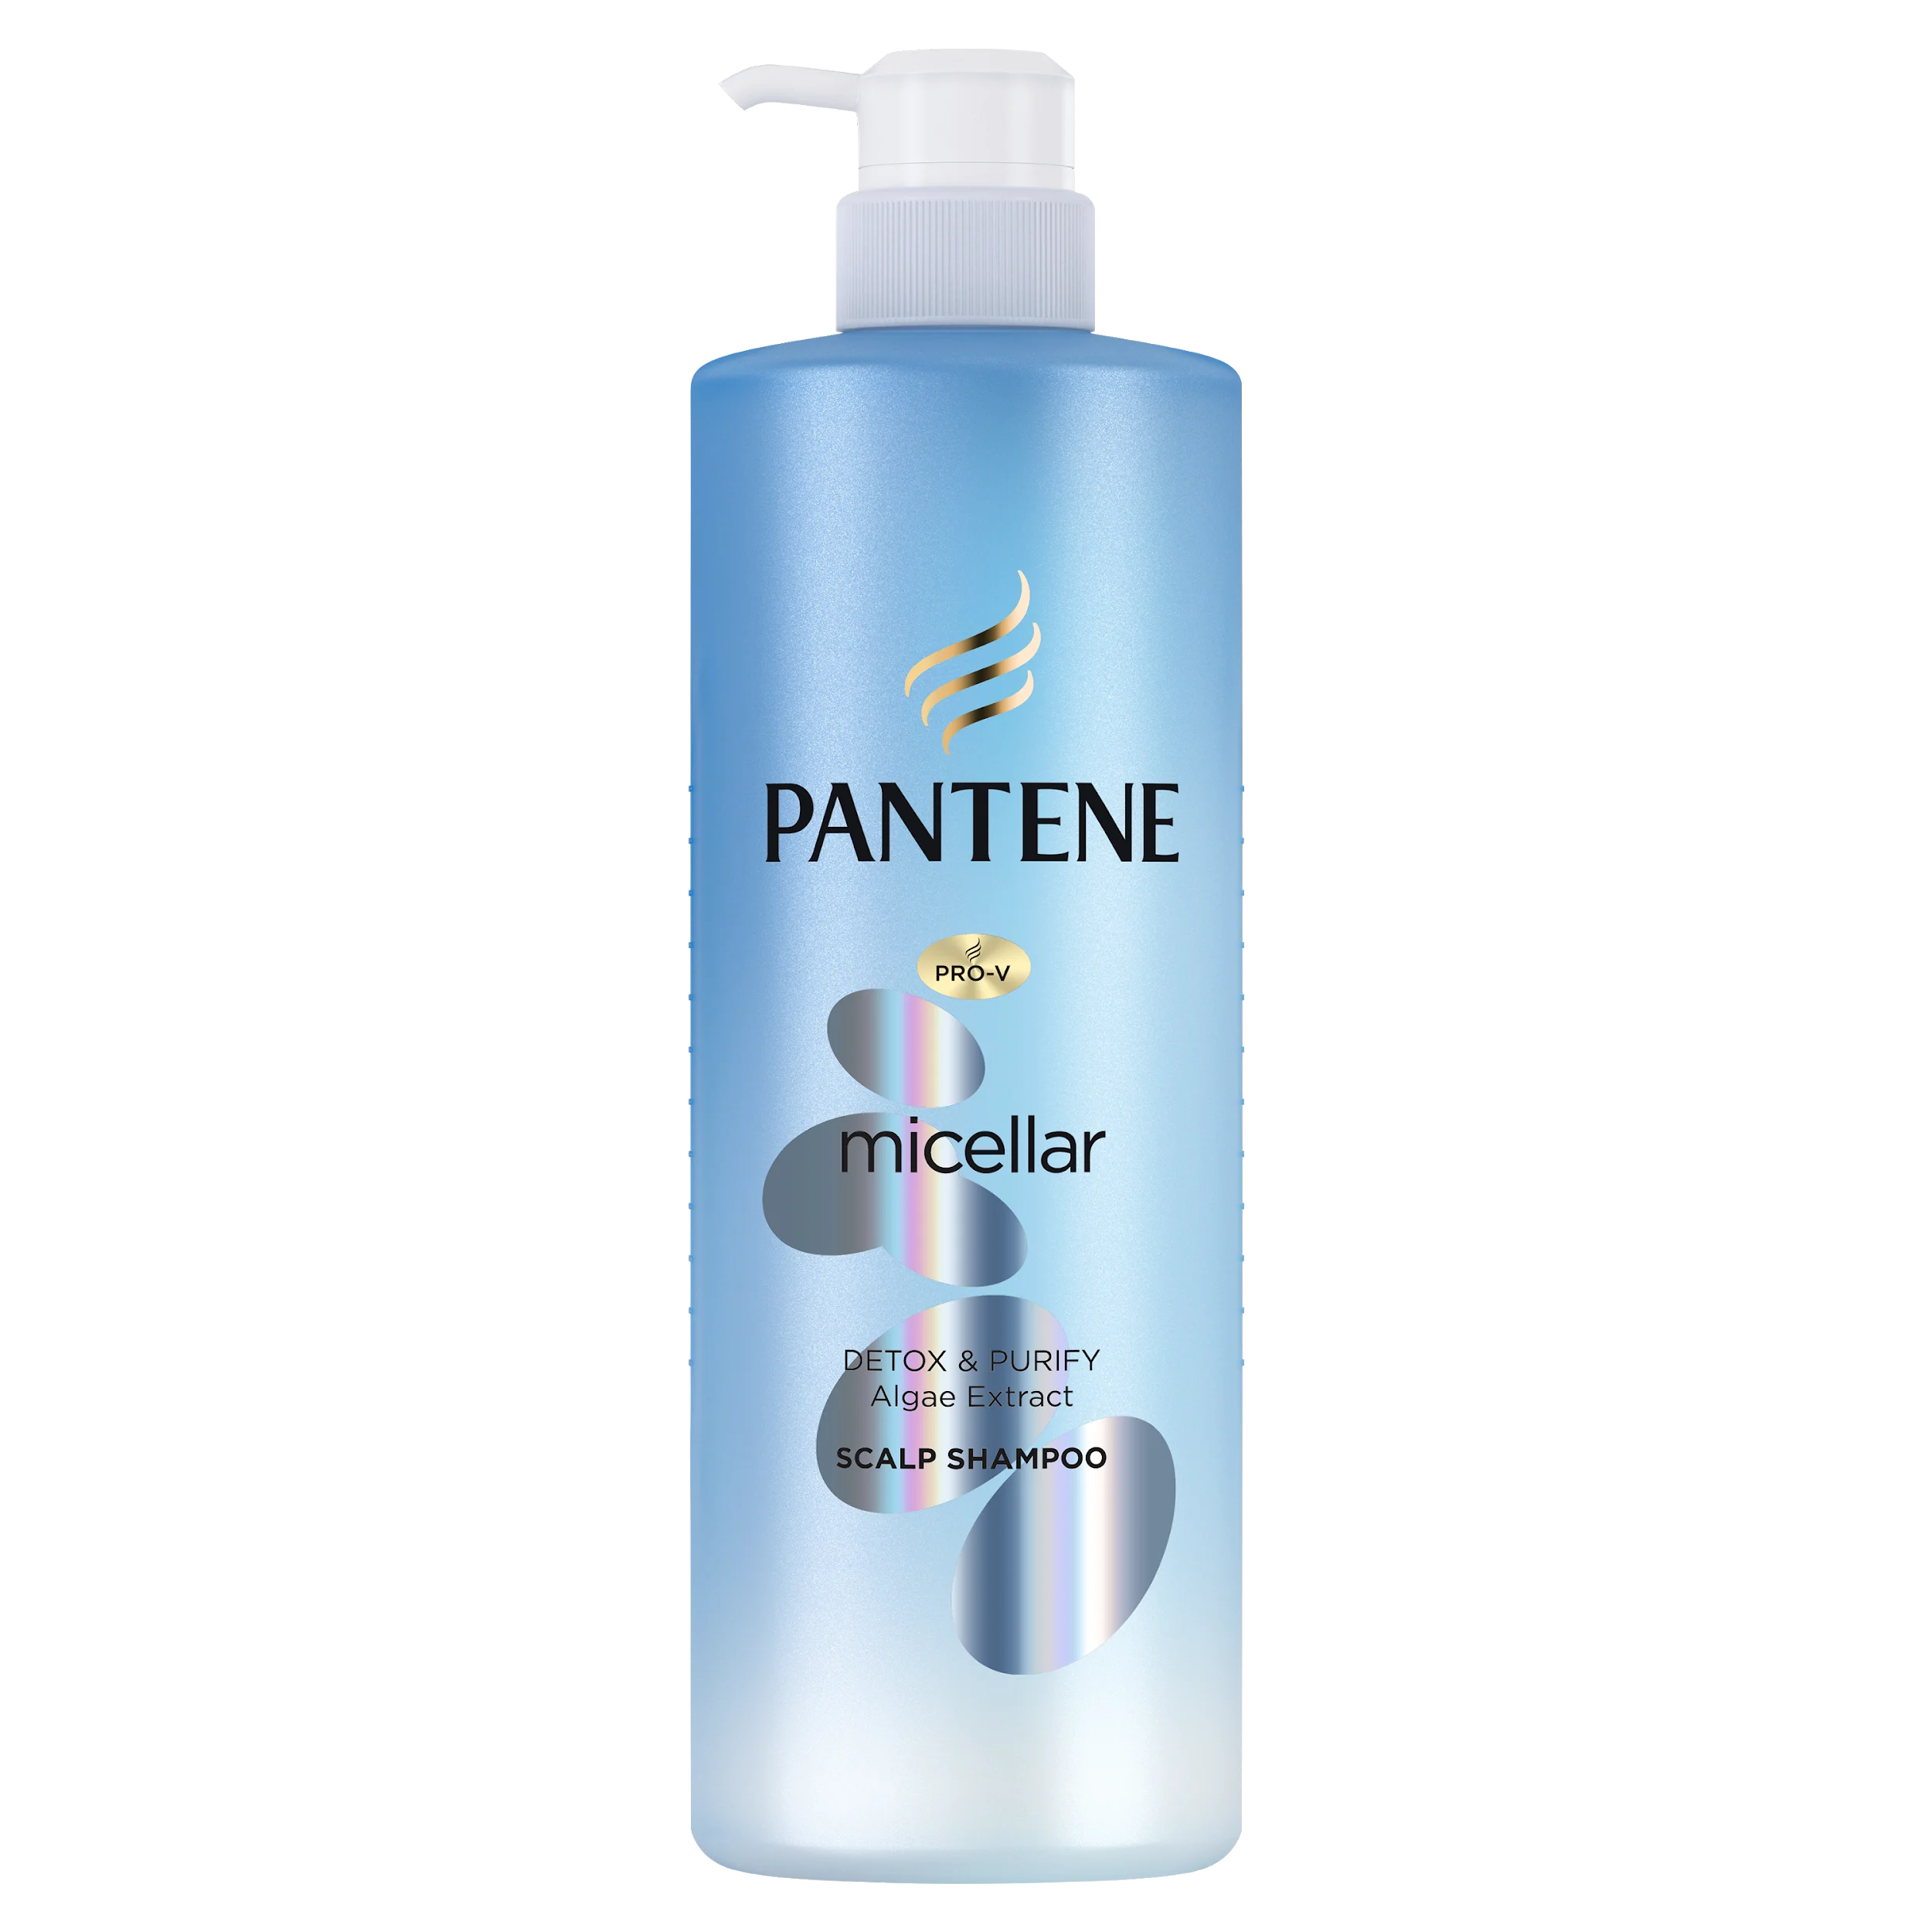 Pantene Micellar Detox and Purify Shampoo